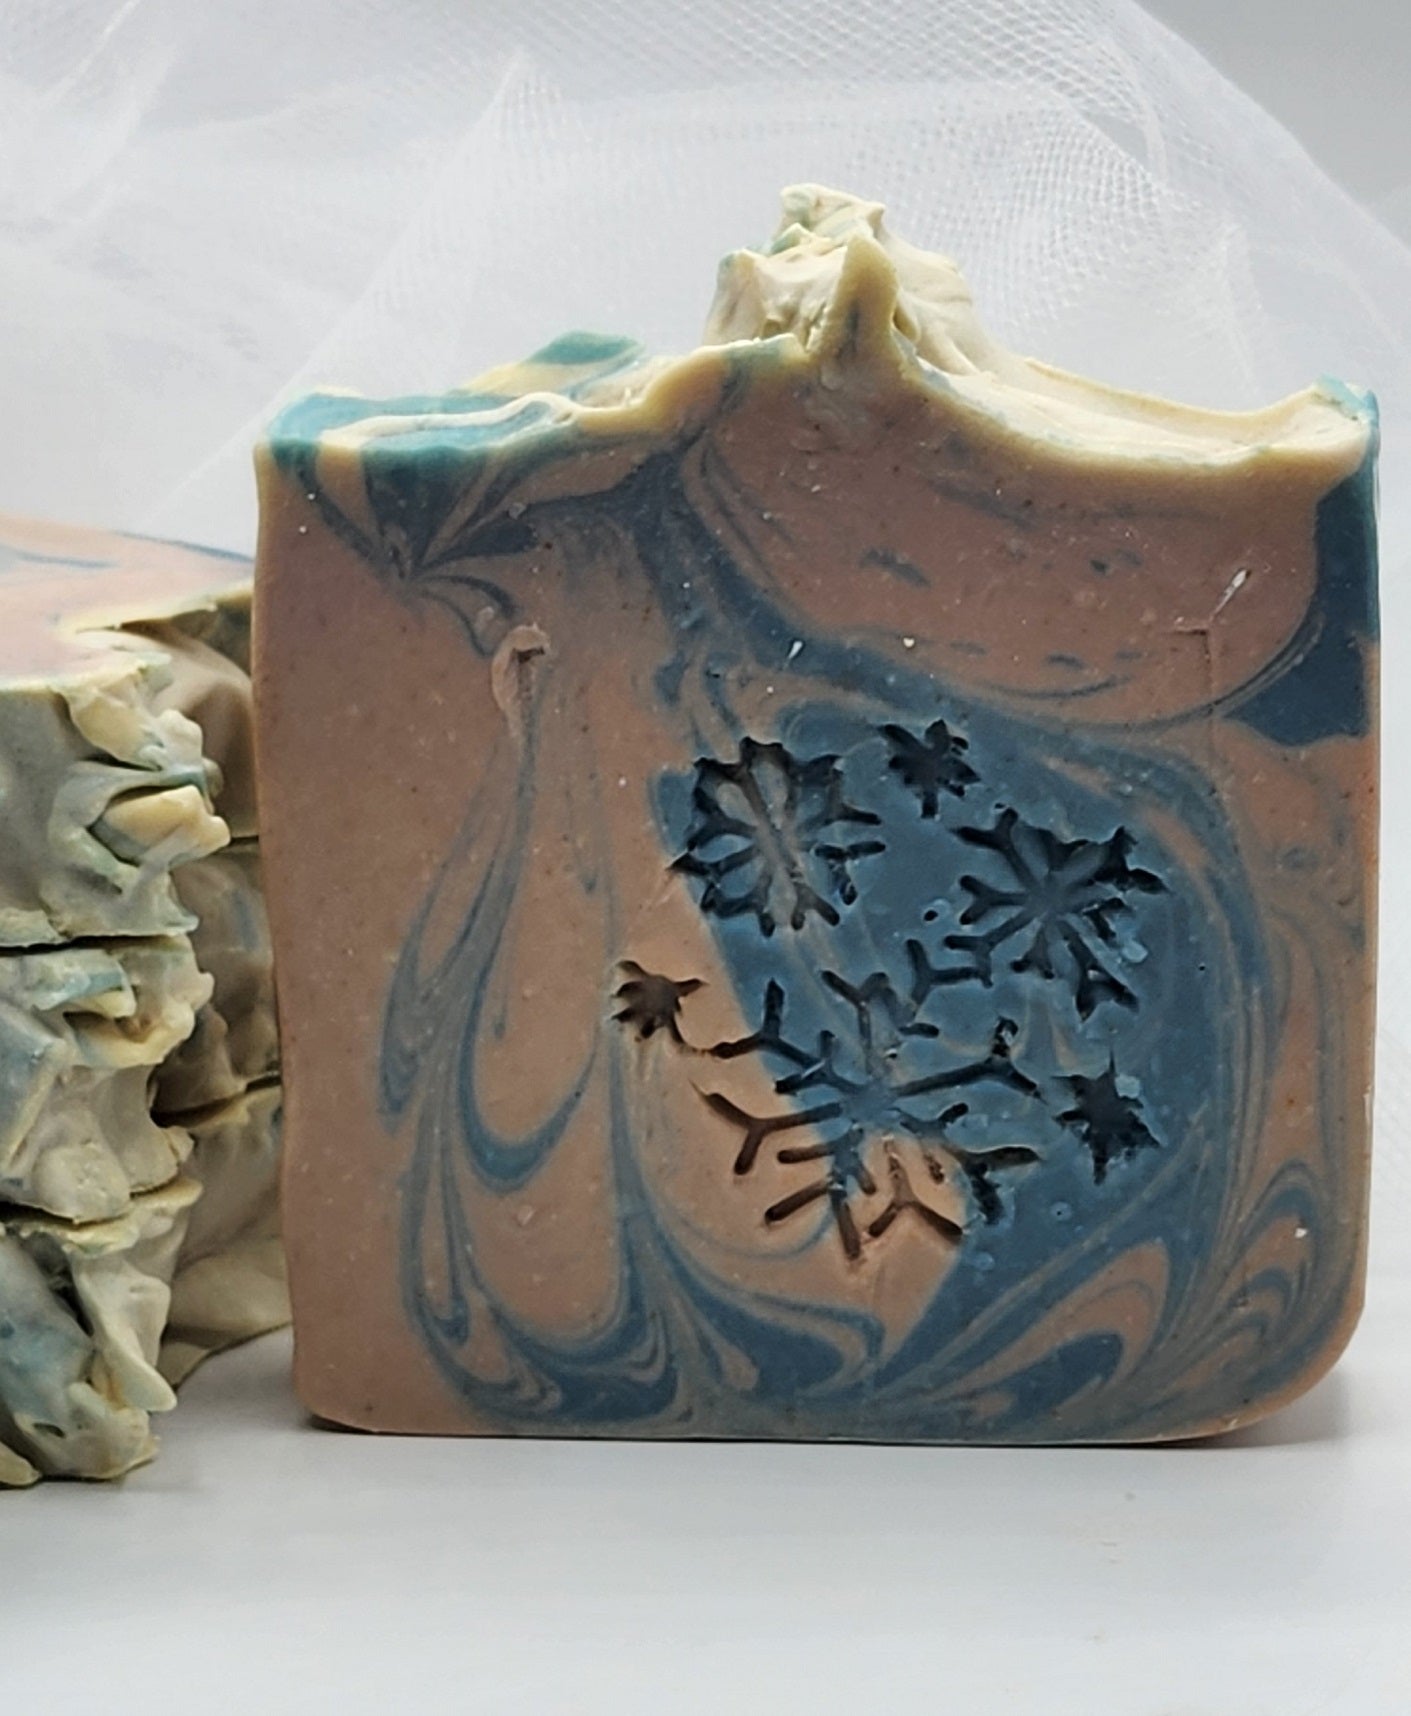 COZY COMFY WEATHER / GOAT'S MILK SOAP / FALL SOAPS / AUTUMN SOAP / Bar Soap / Gift Soap / Gift Idea / Handmade Soap / Cold Process Soap